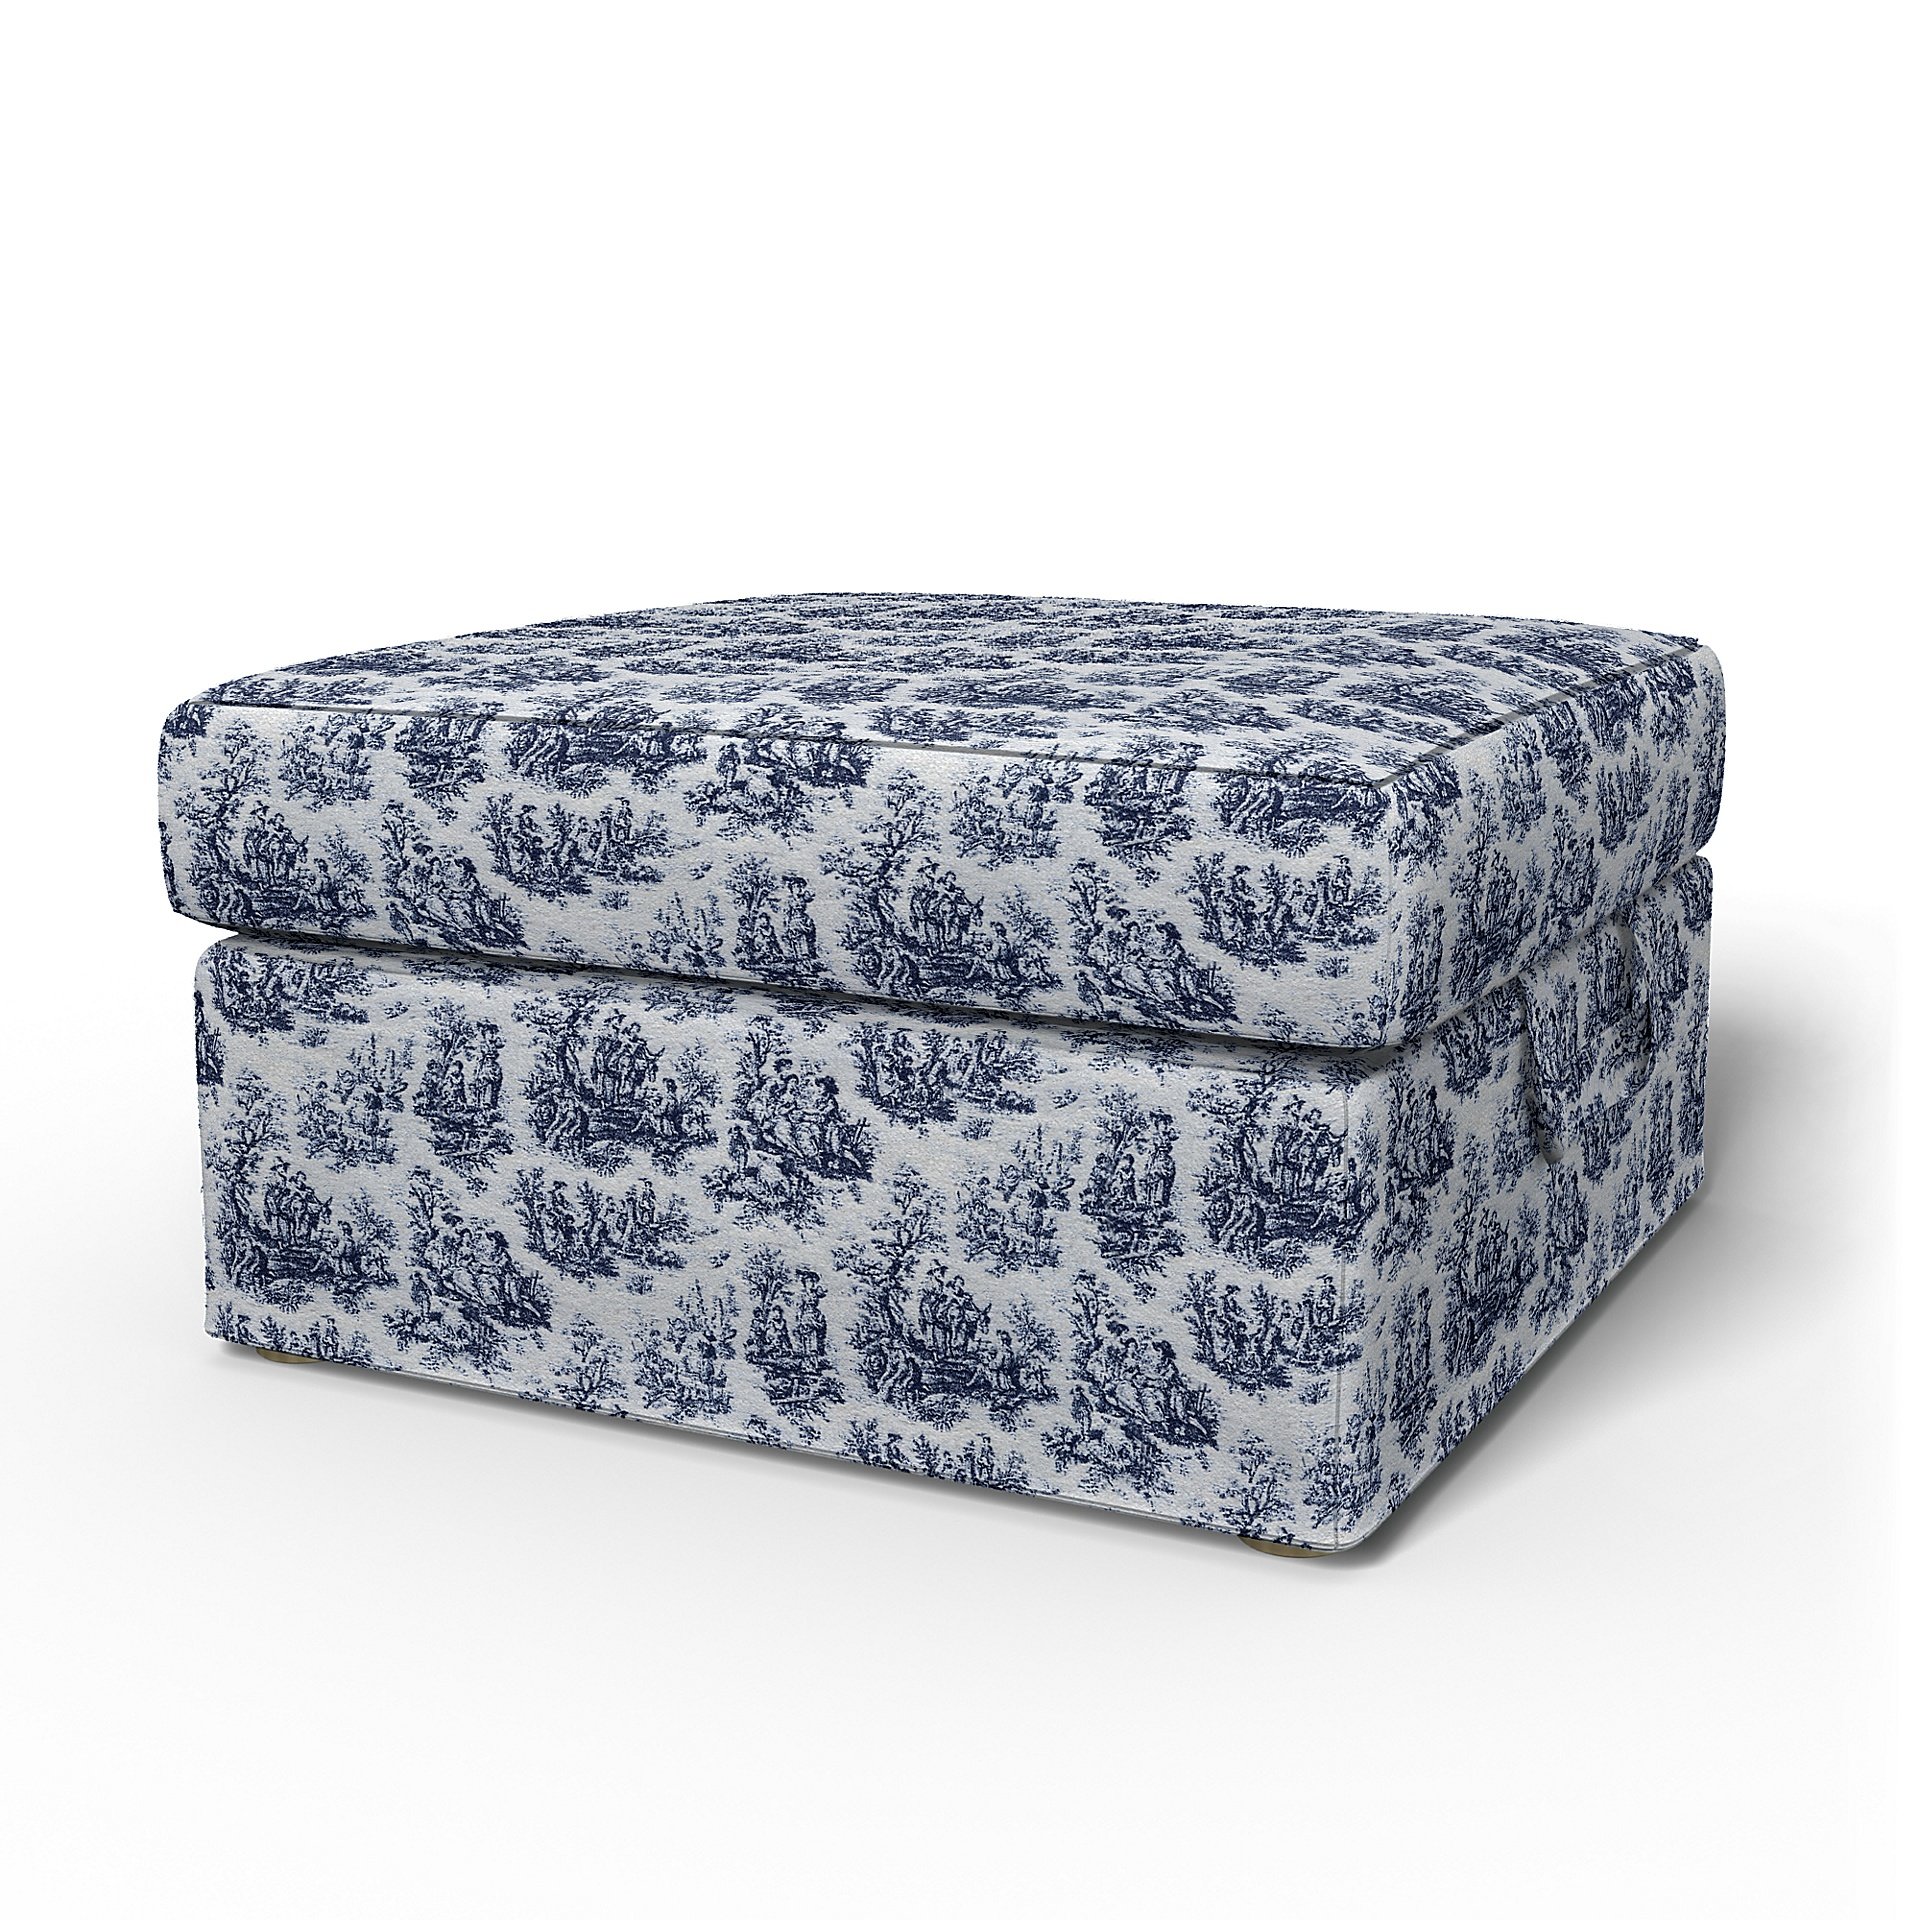 IKEA - Tomelilla Foto Footstool Cover, Dark Blue, Boucle & Texture - Bemz